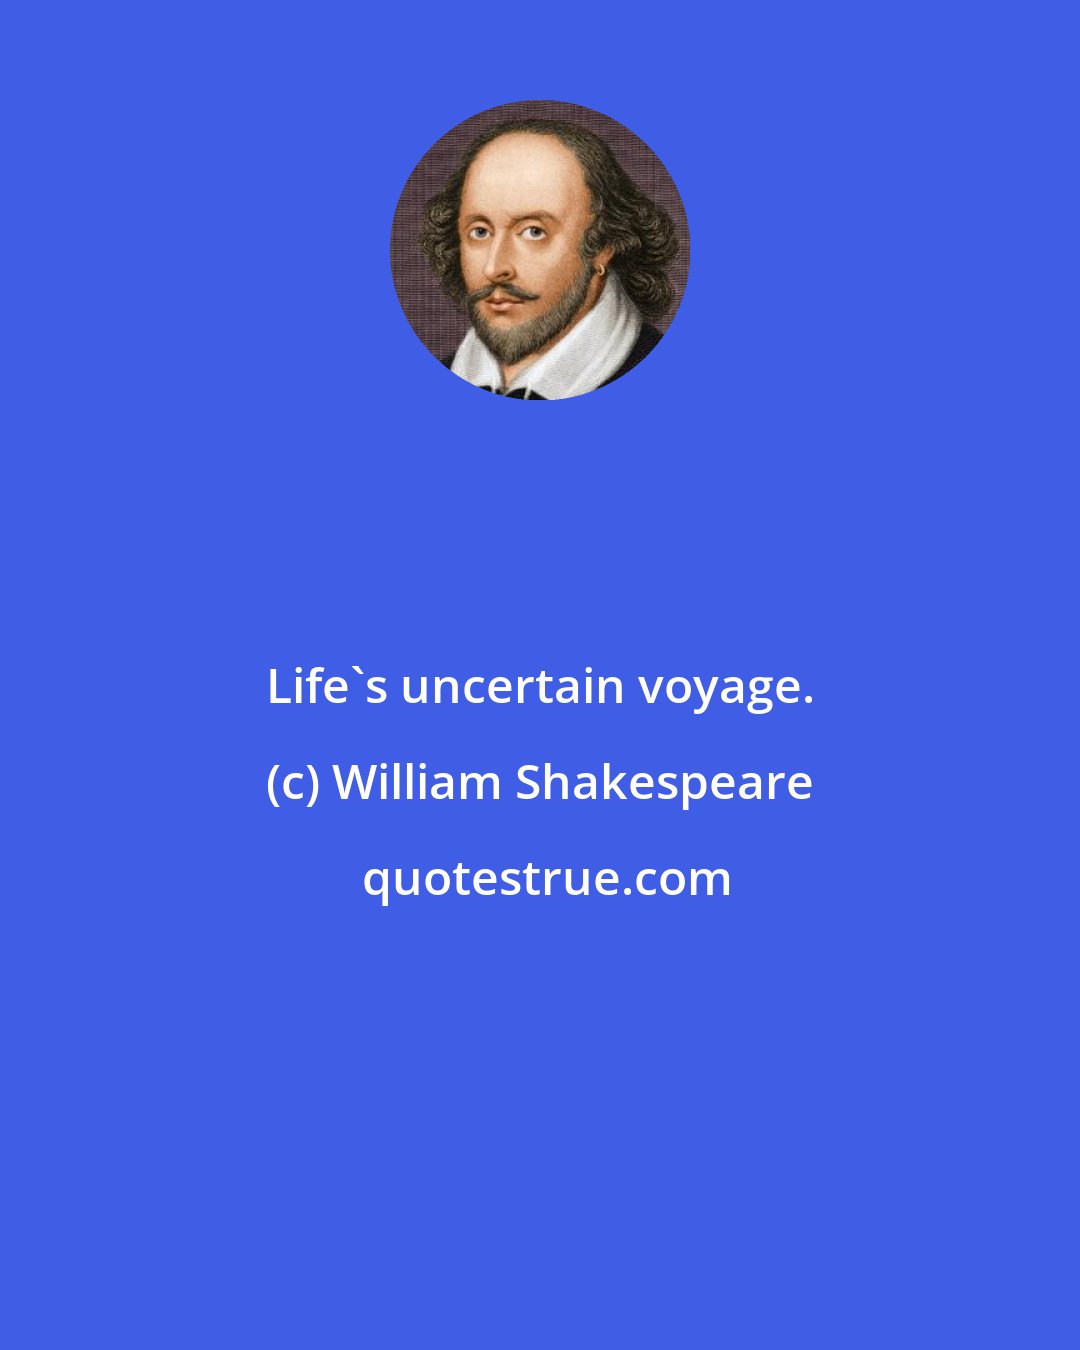 William Shakespeare: Life's uncertain voyage.